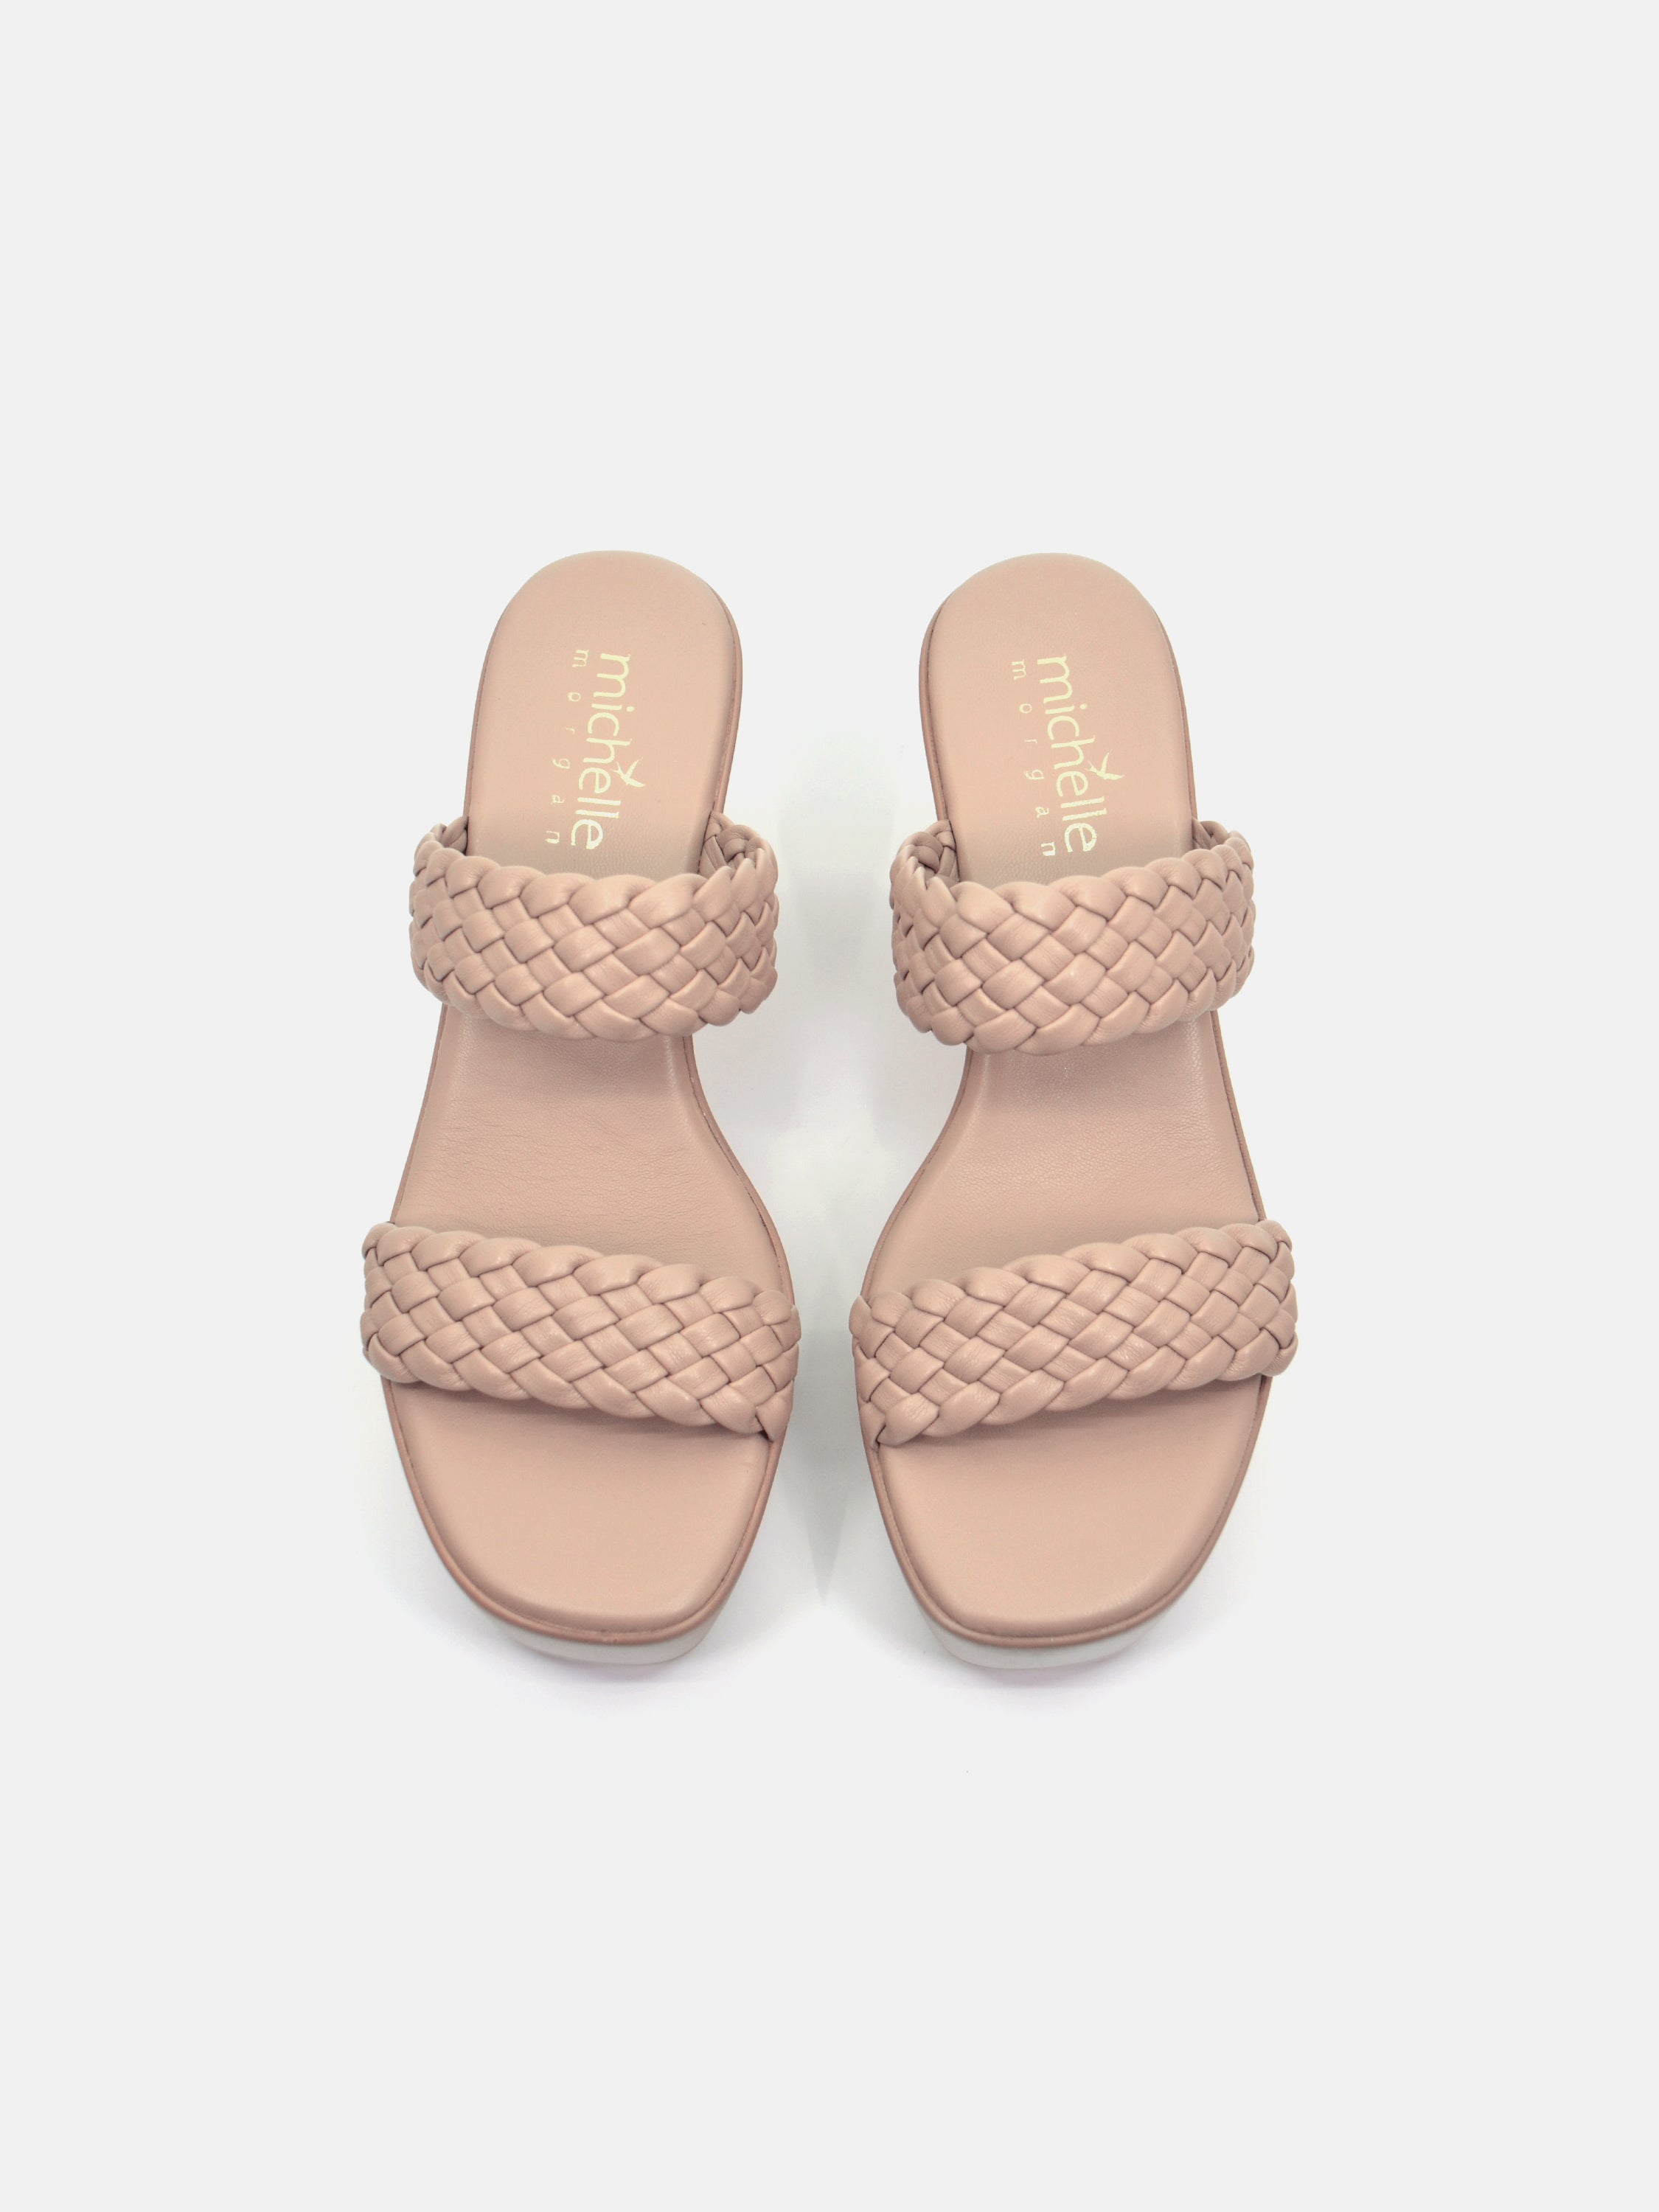 Michelle Morgan 114RJ85E Women's Braided Strap Sandals #color_Beige